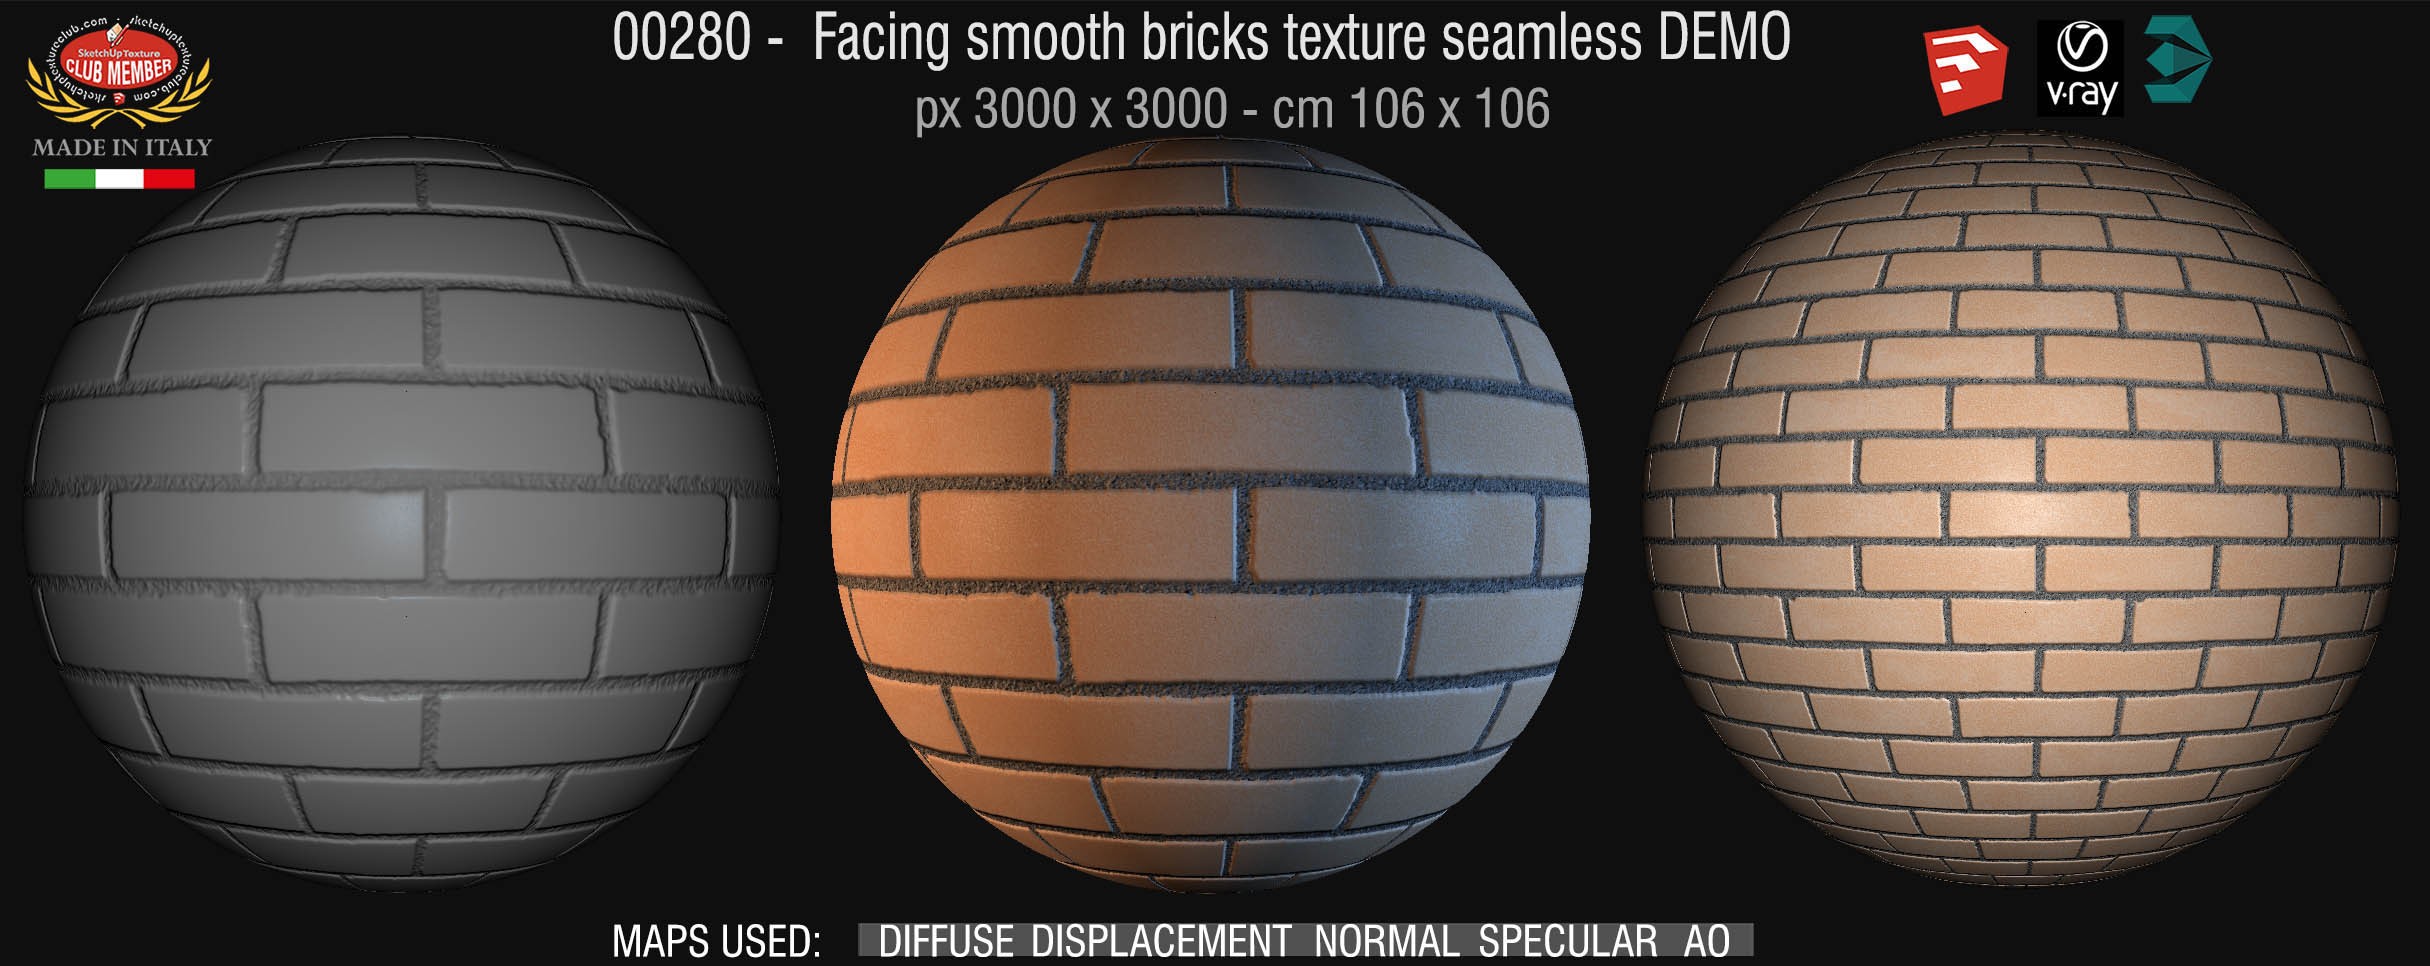 00280 Facing smooth bricks texture seamless + maps DEMO